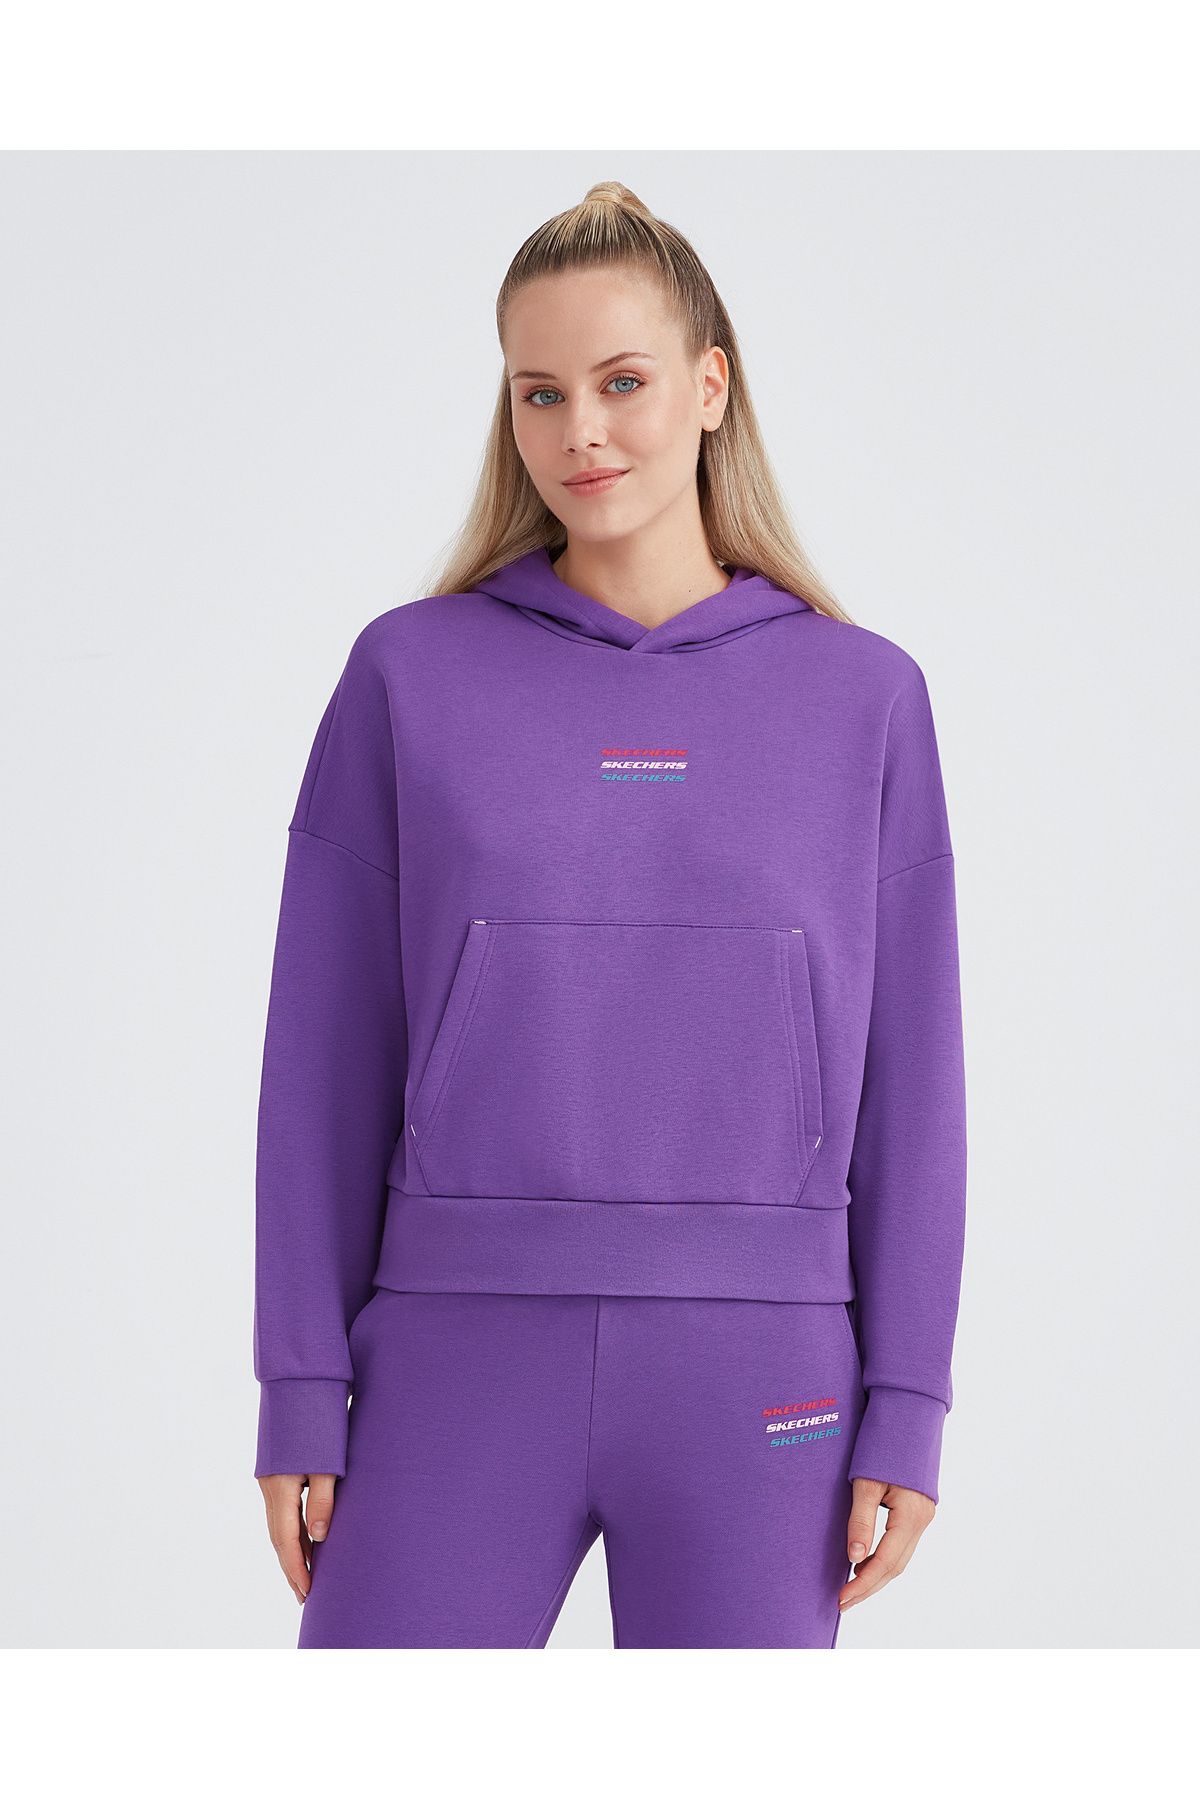 Skechers W Essential Hoodie Sweatshirt Kadın Mor Sweatshirt S232243-499